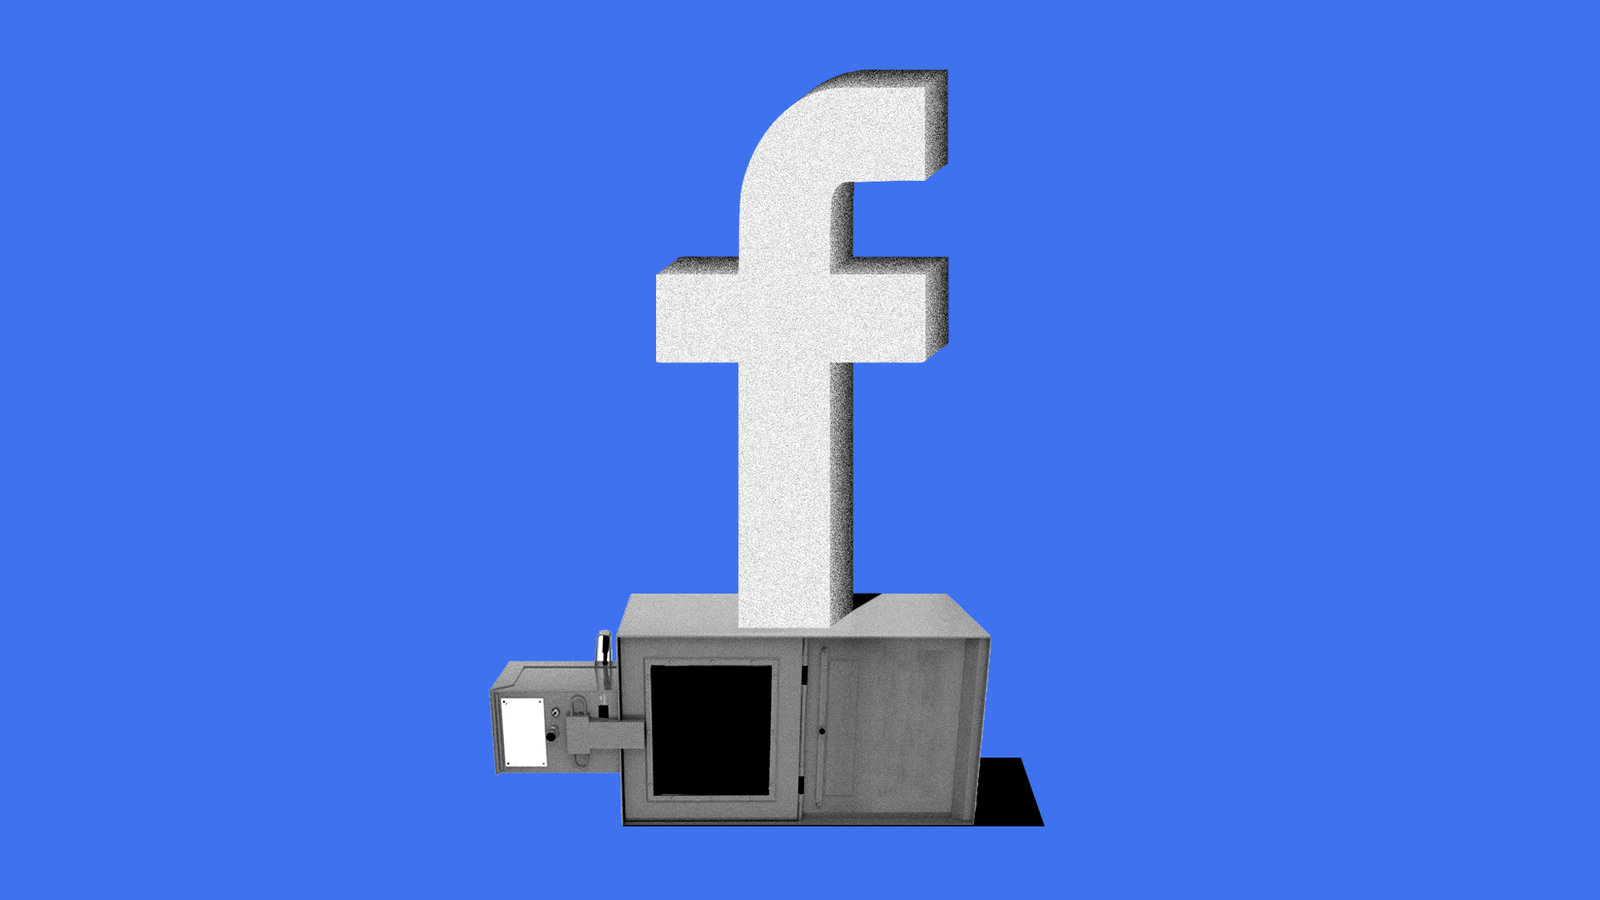 facebook logo 2022 png